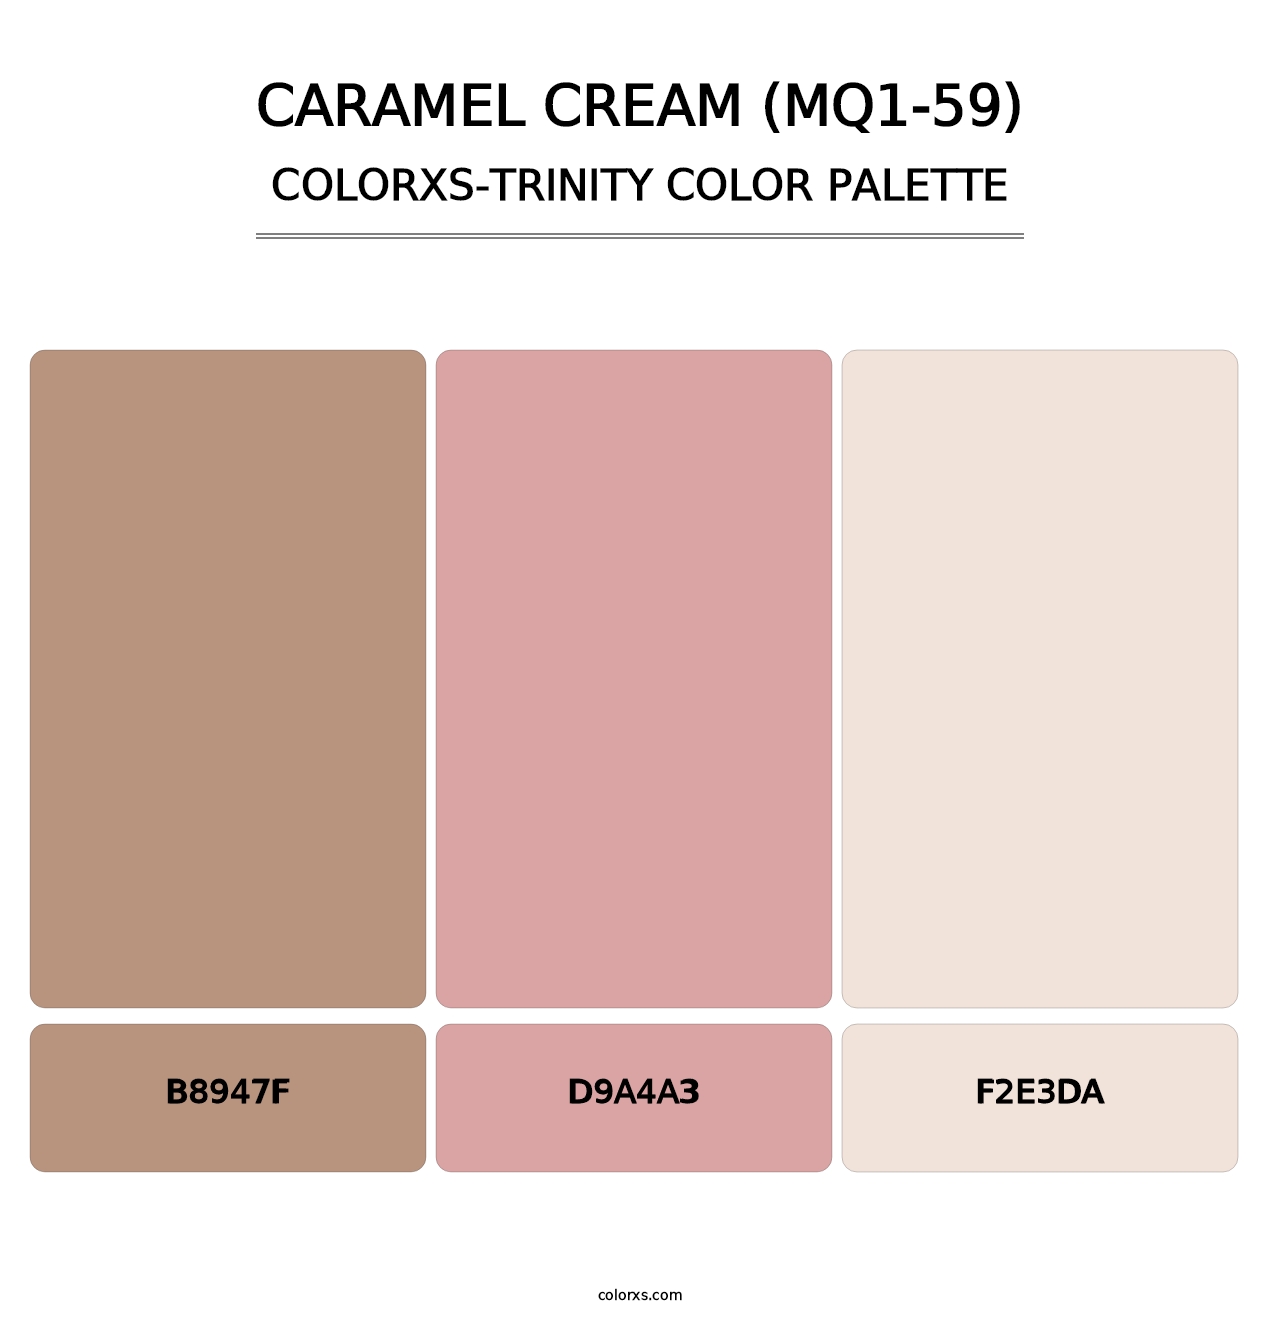 Caramel Cream (MQ1-59) - Colorxs Trinity Palette